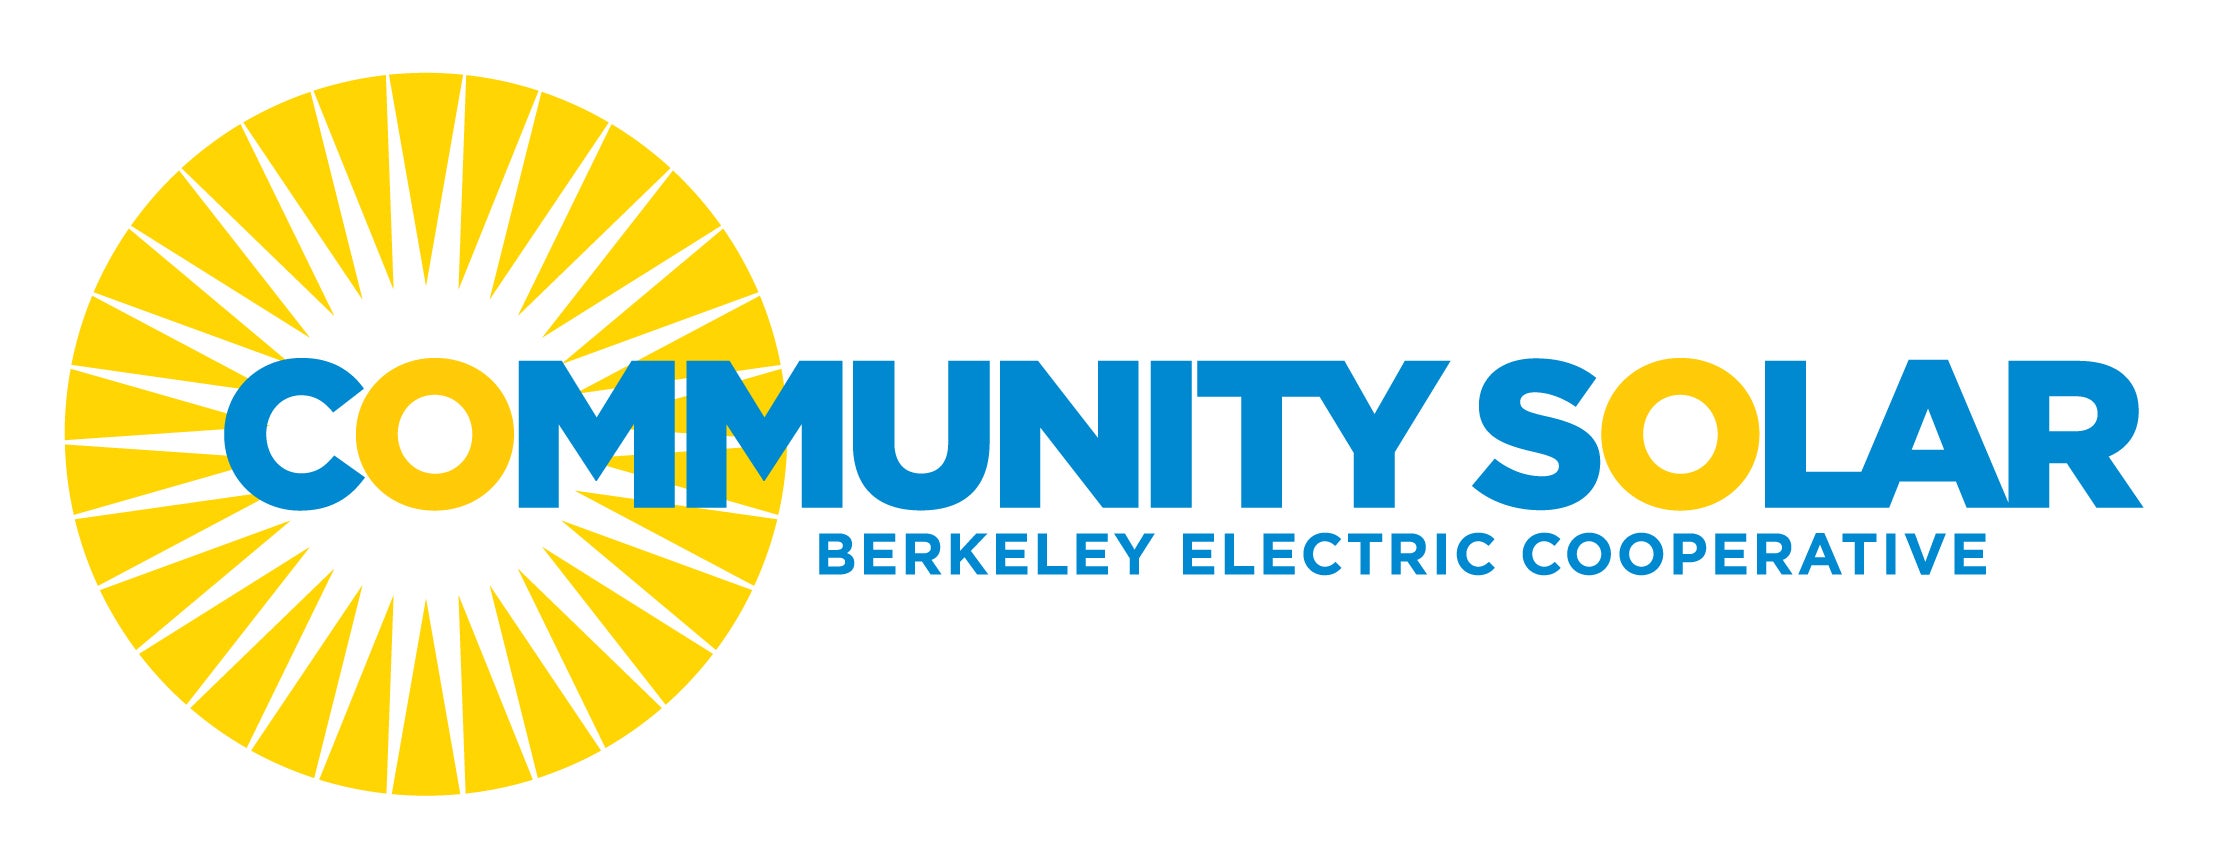 community-solar-berkeley-electric-cooperative